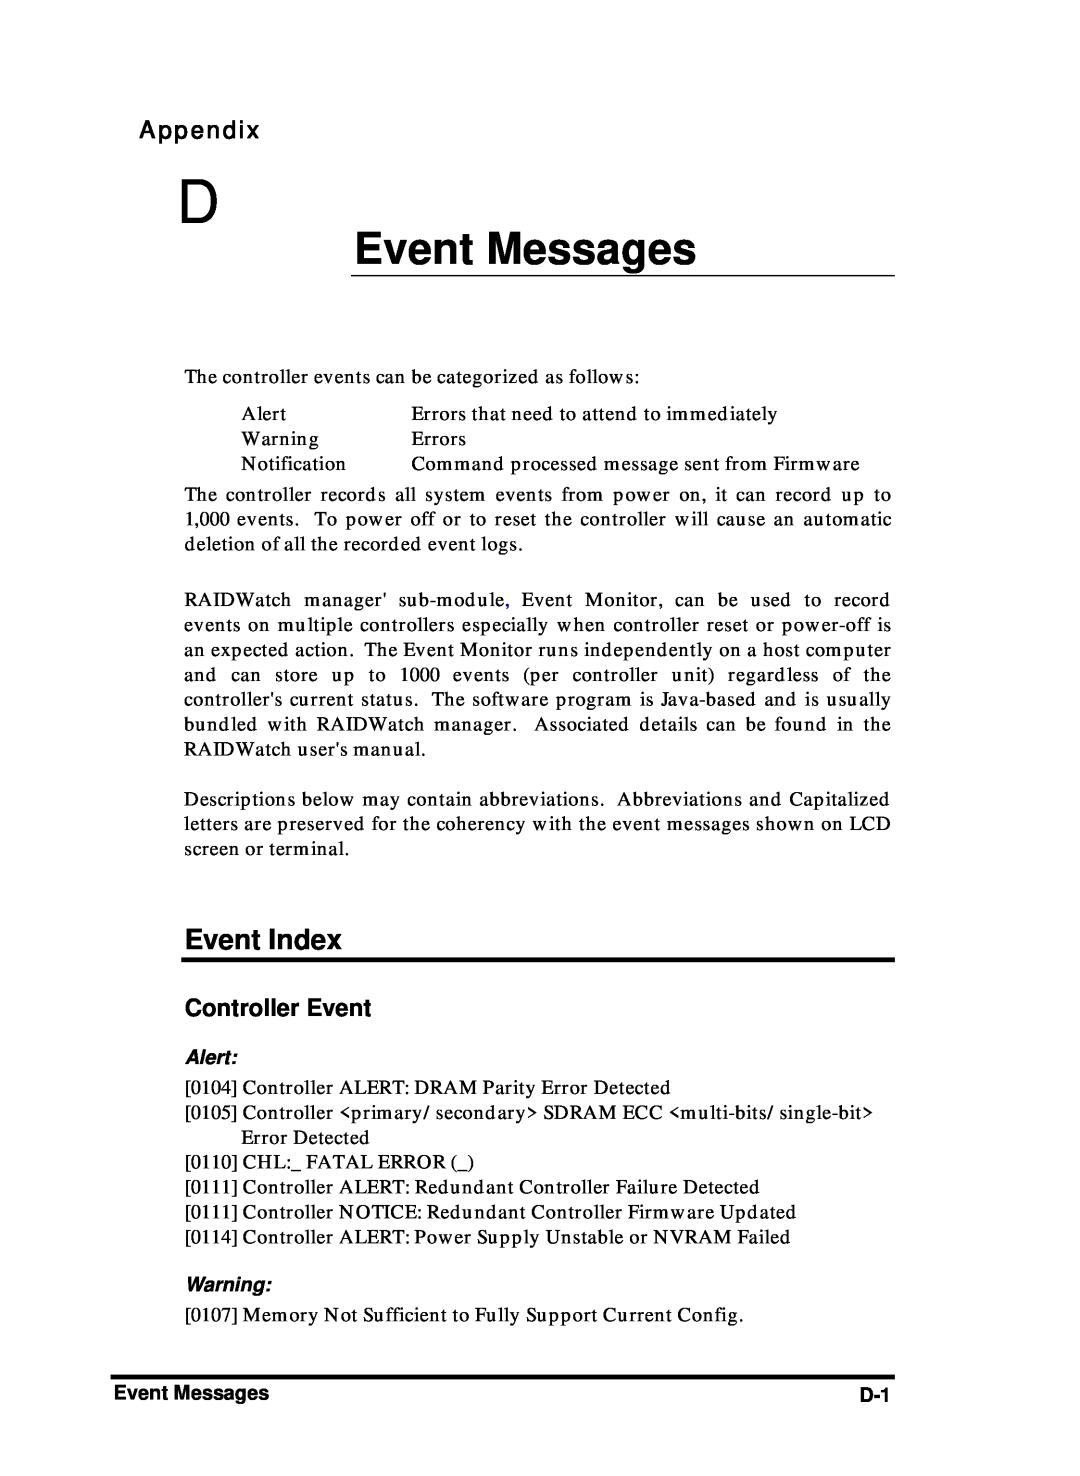 Compaq Infortrend manual Event Messages, Event Index, Controller Event, Alert, Appendix 